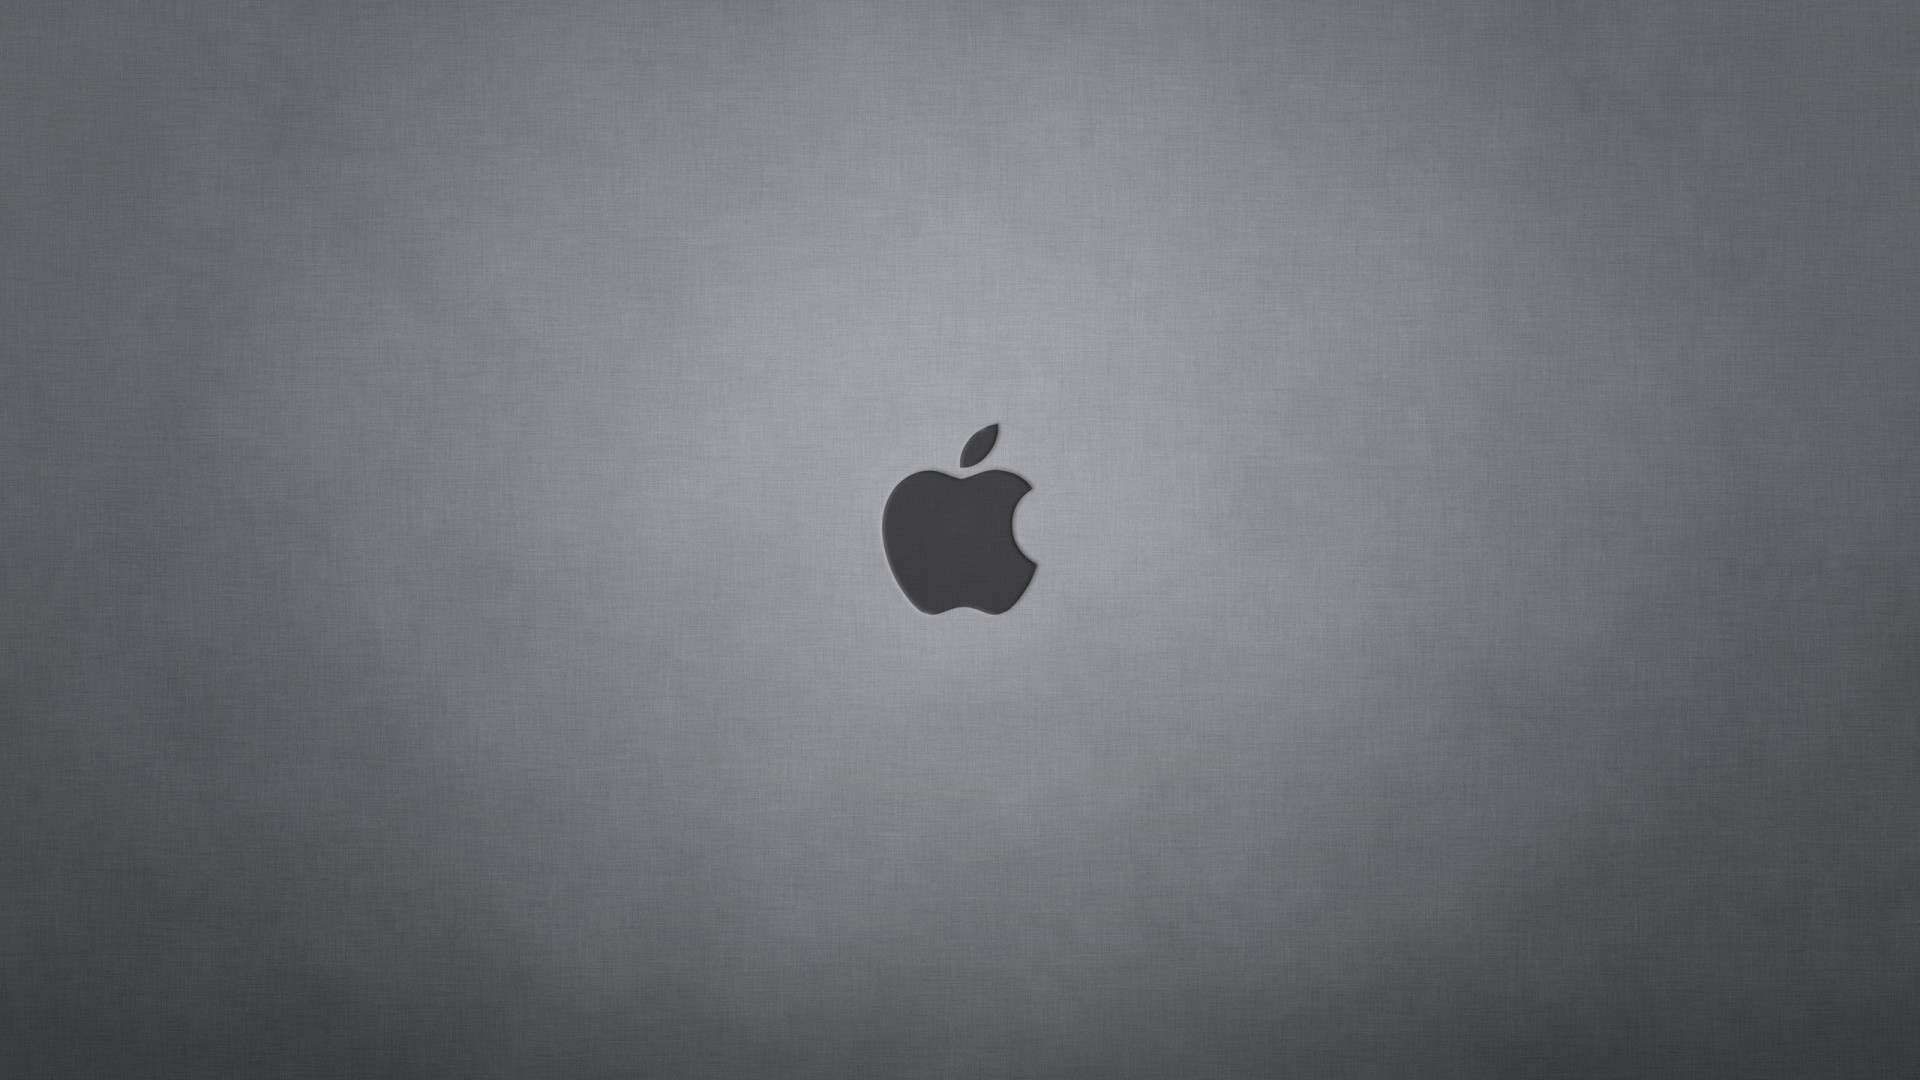 Mac Os X Desktop Backgrounds (58+ images)